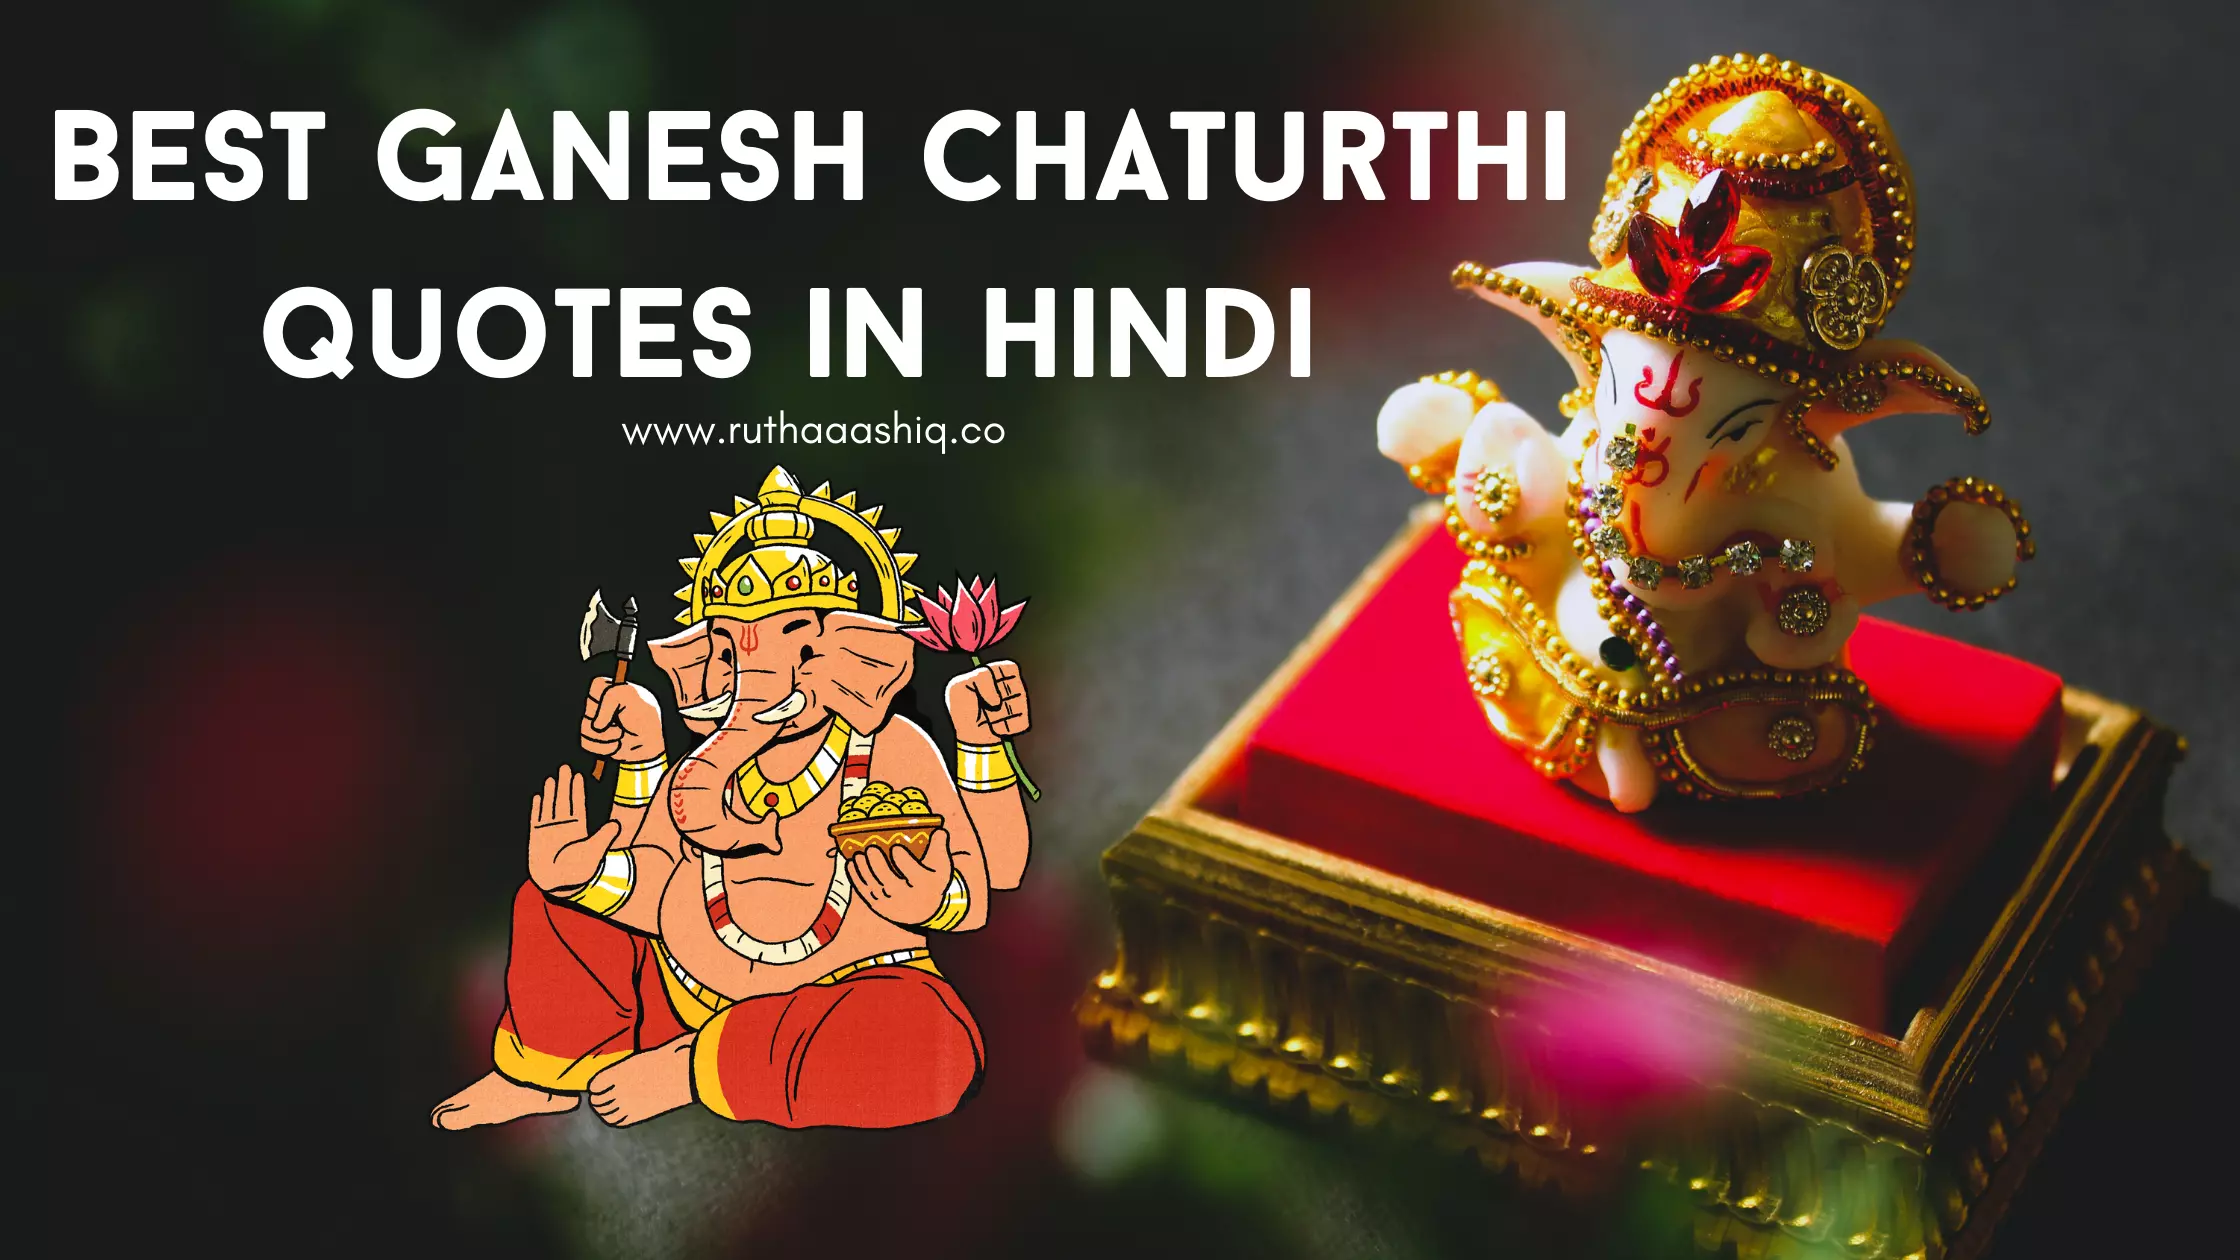 Ganesh chaturthi quotes in hindi